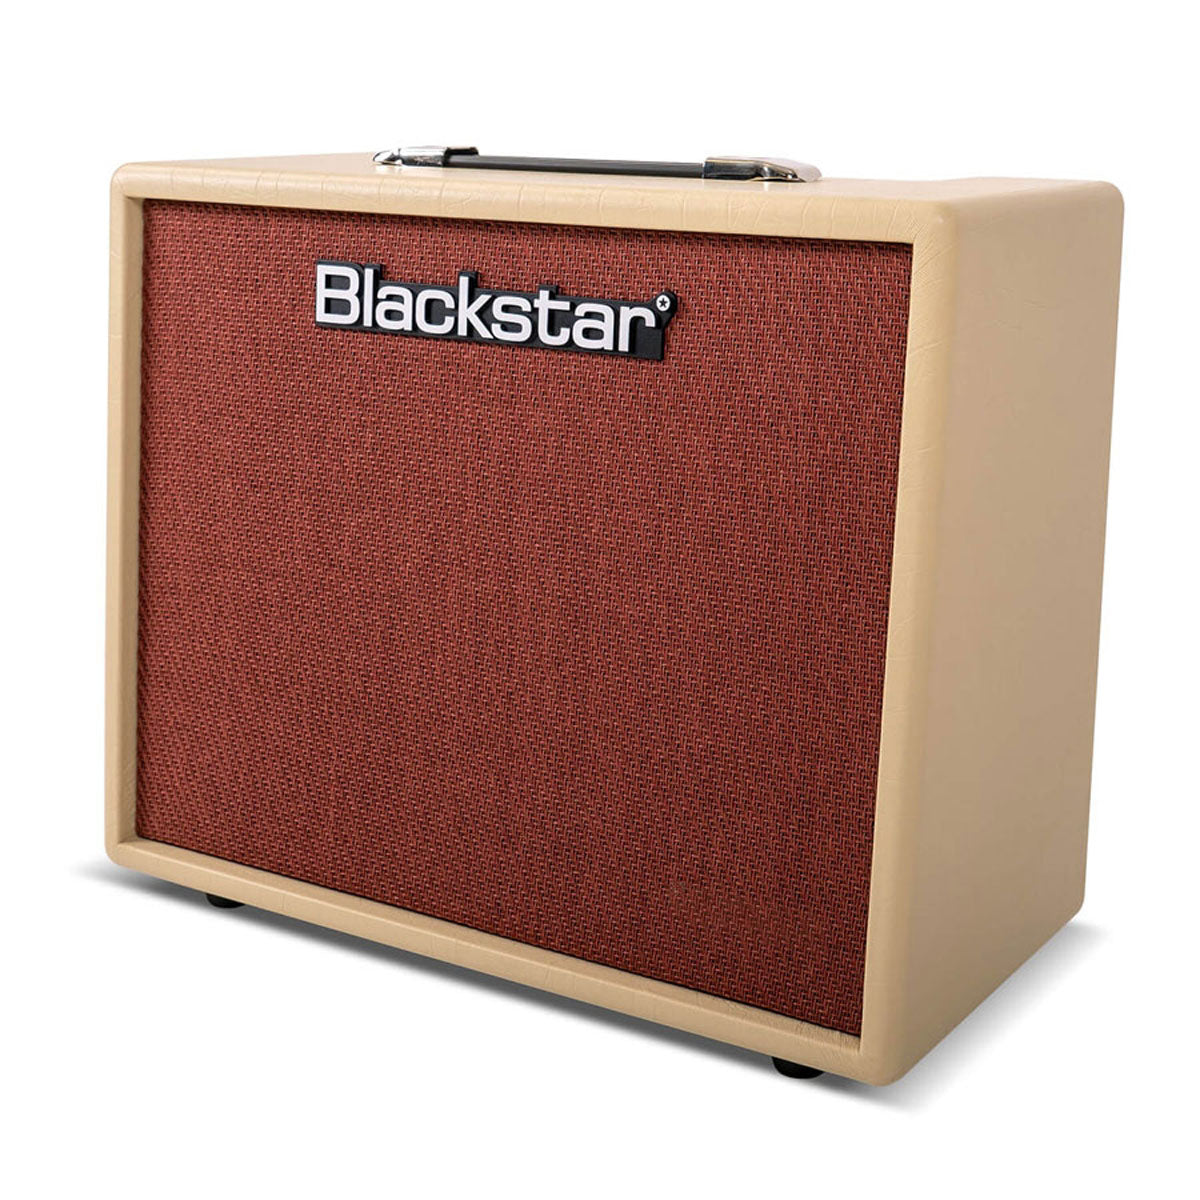 Blackstar Debut 50R 1x12 Inch 50 Watt Guitar Combo Amplifier